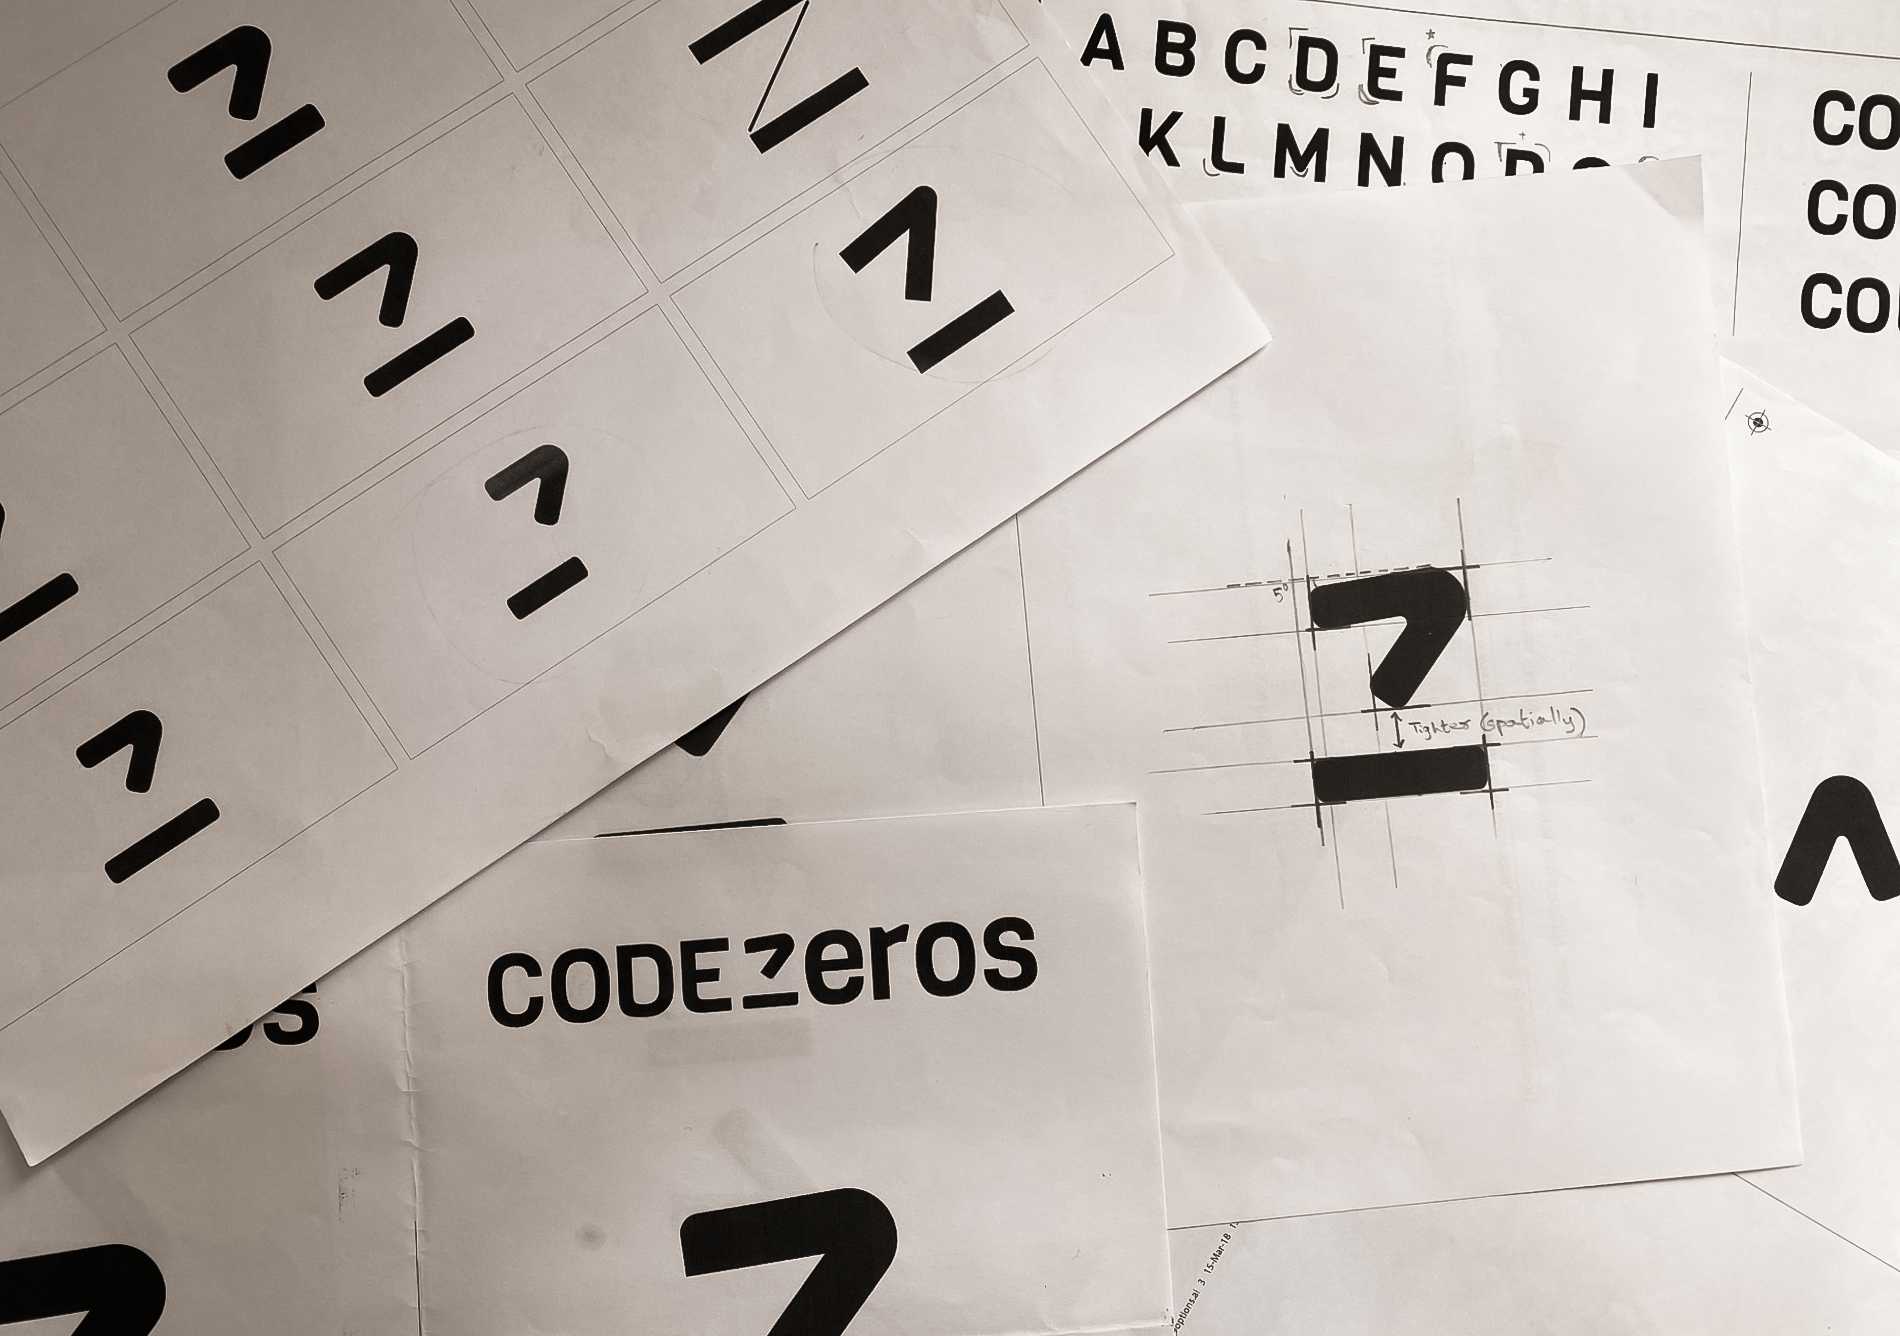 Final iterations of codezeros brandmark